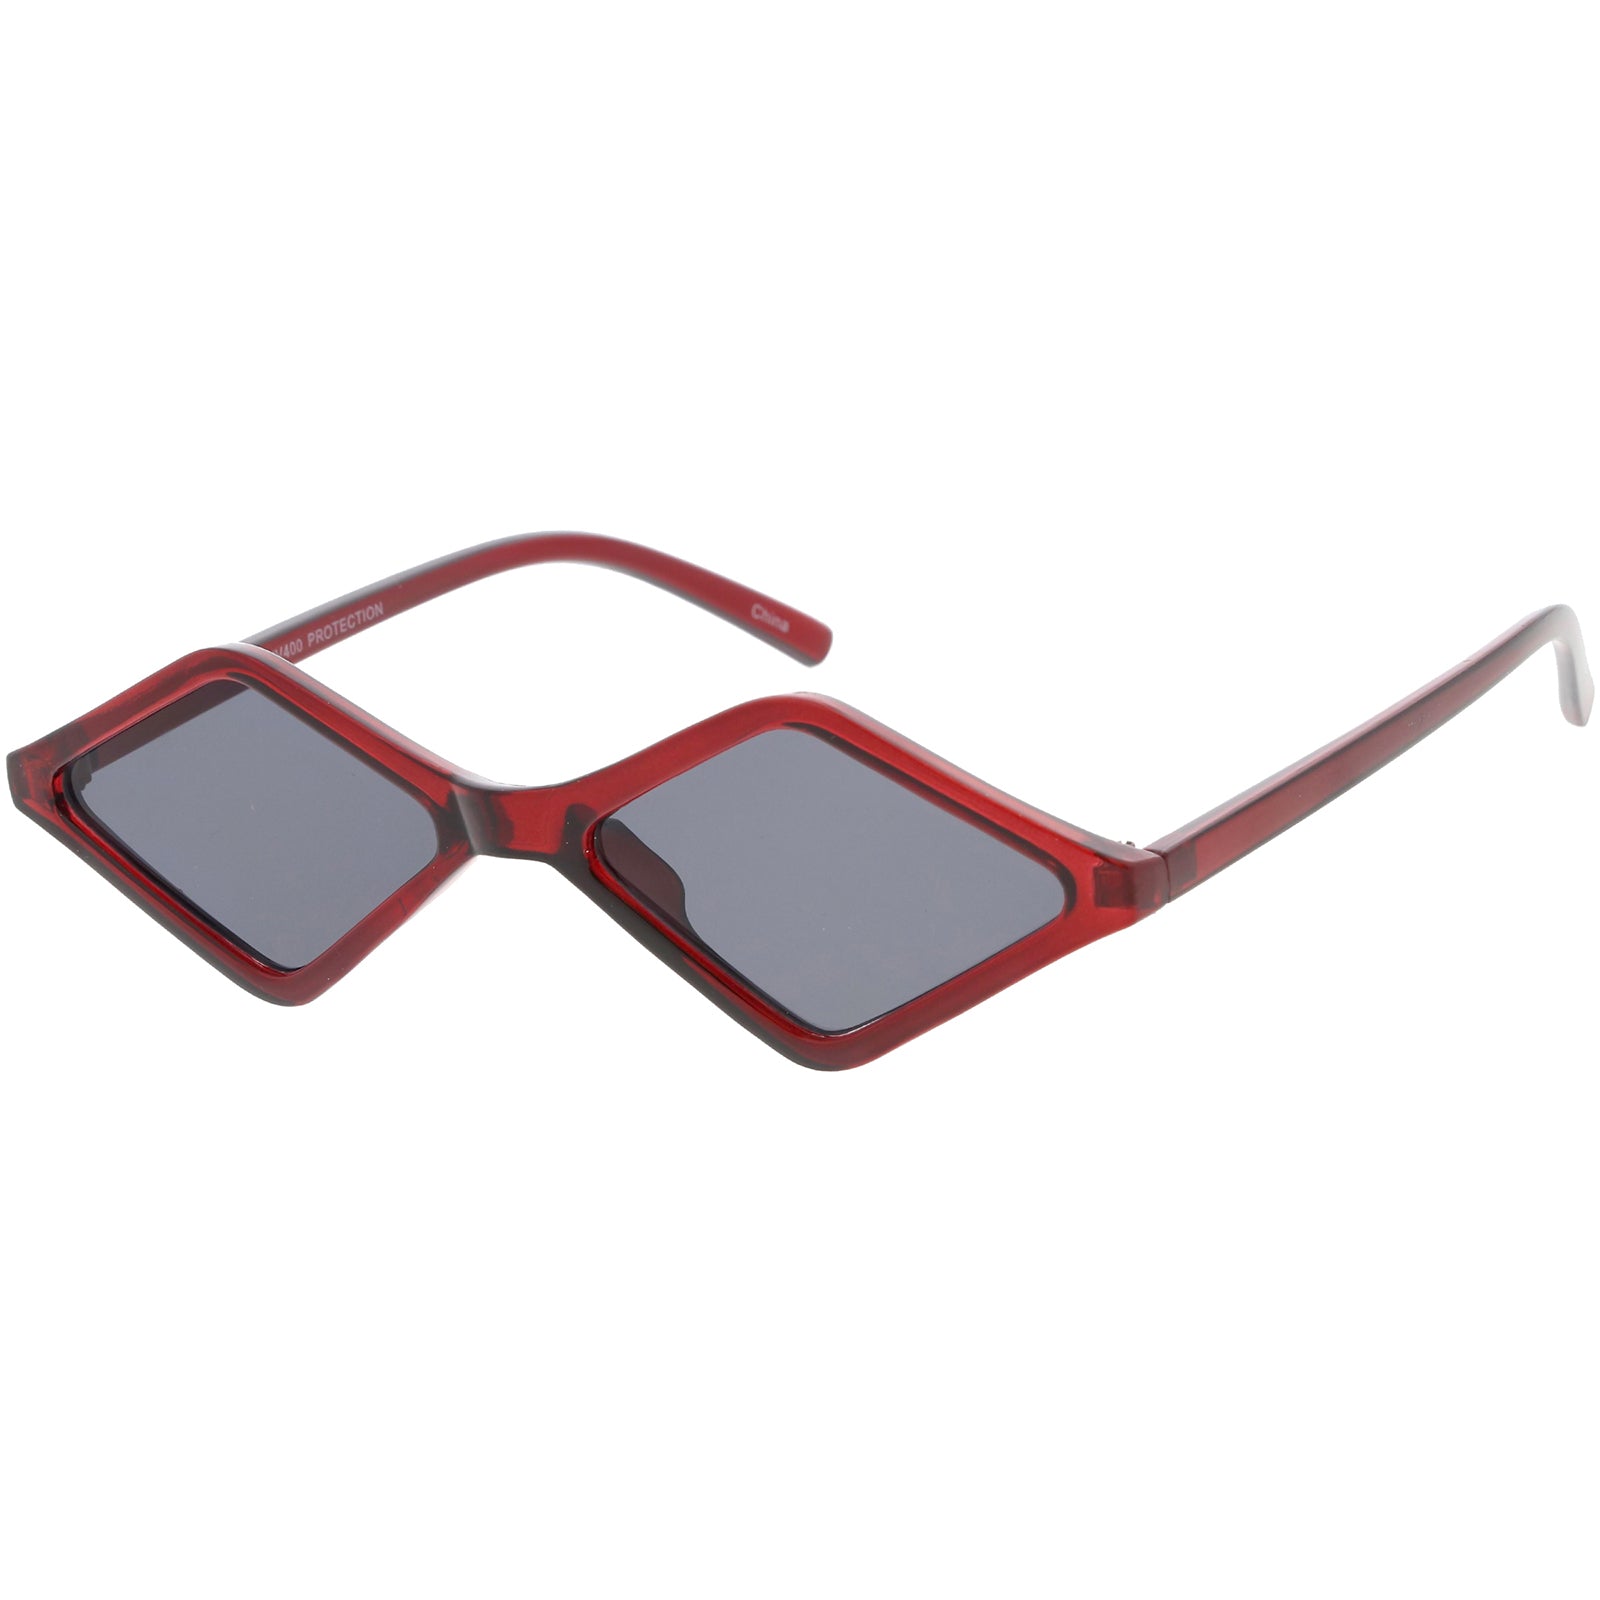 Geometric Diamond Shape Sunglasses Slim Arms Neutral Colored Lens 54mm